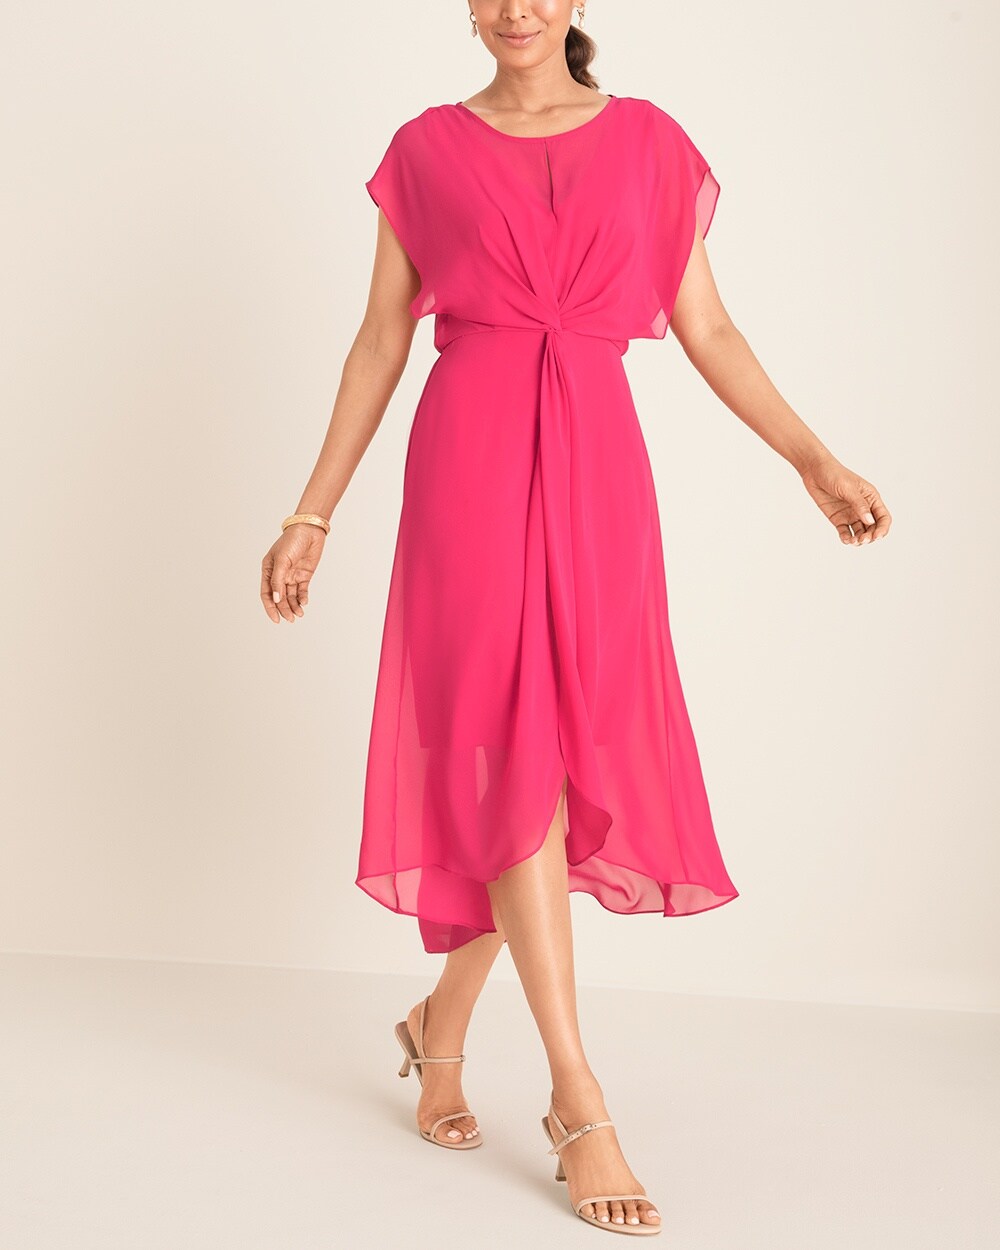 Adrianna Papell Pink Chiffon High-Low Midi Dress